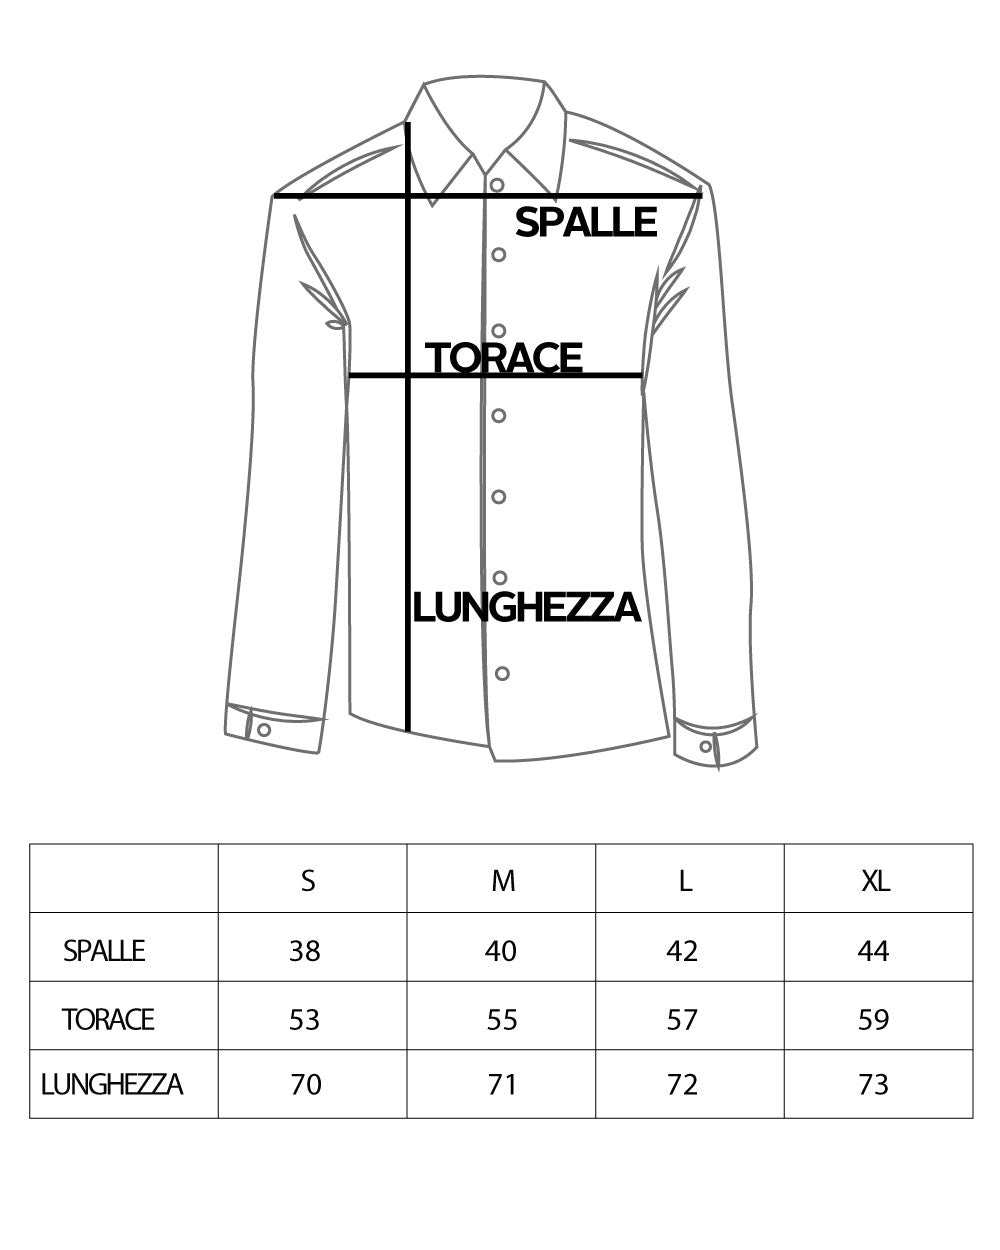 Men's Cotton Shirt Collar Short Sleeves Solid Color Zipper Black GIOSAL-CC1200A